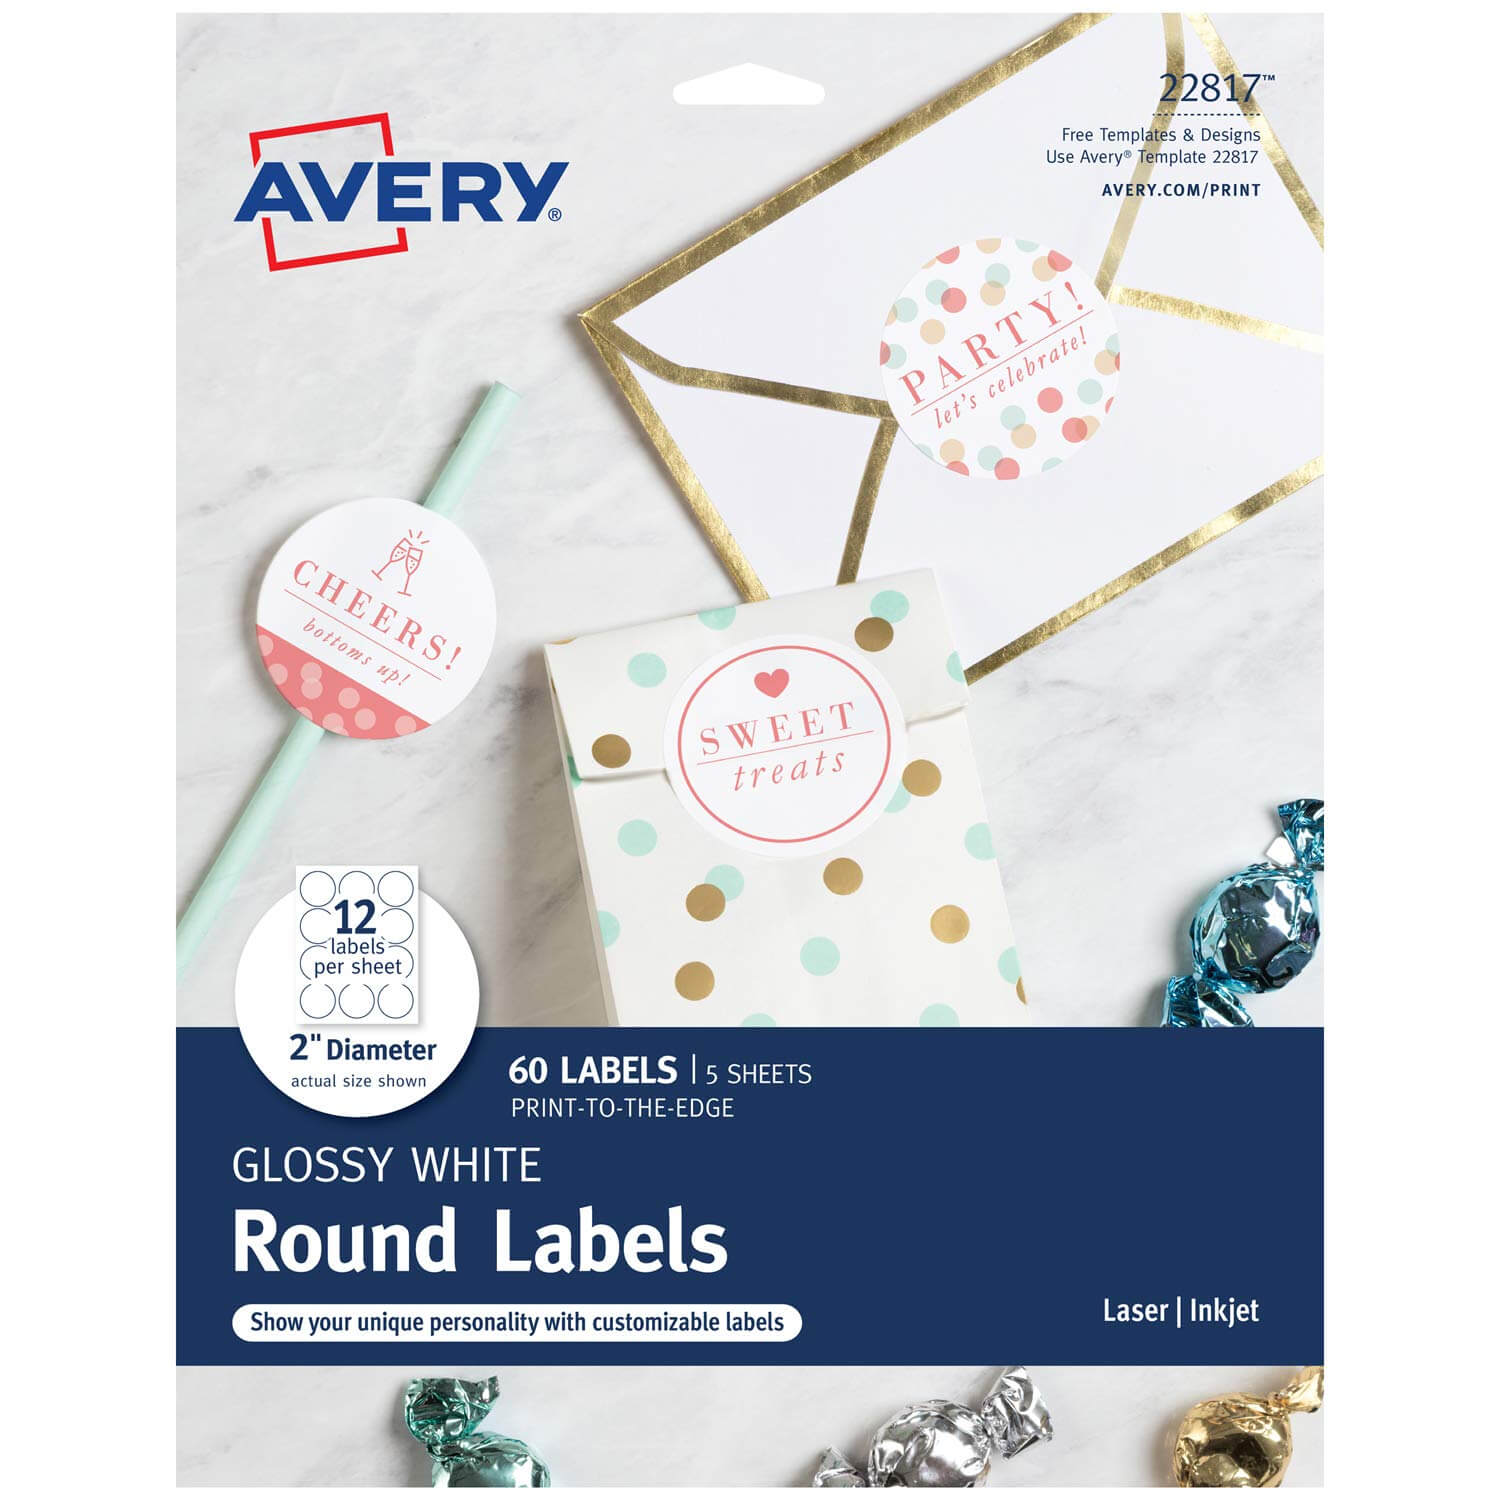 Avery Return Ddress Labels Template Per Sheet Label Word In Word Label Template 12 Per Sheet